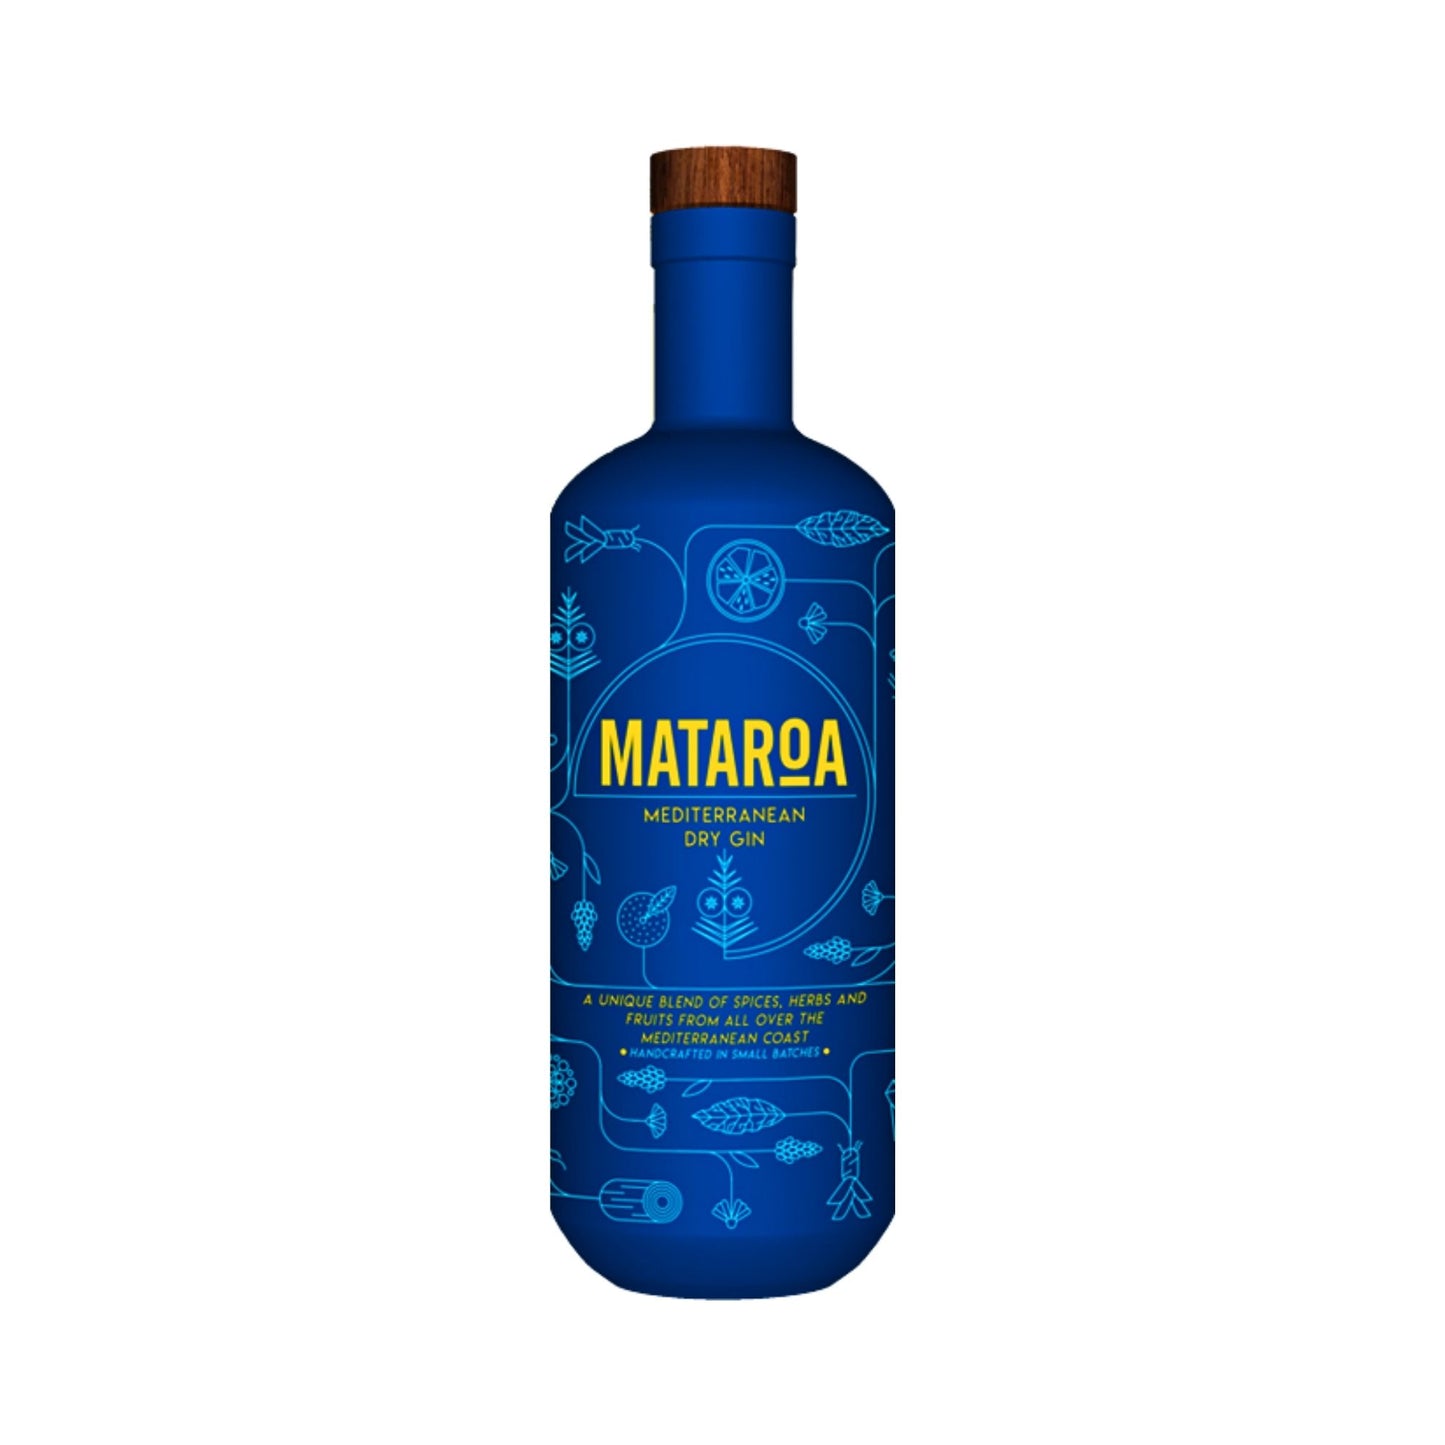 MATAROA MEDITERRANEAN GIN 0.7LT